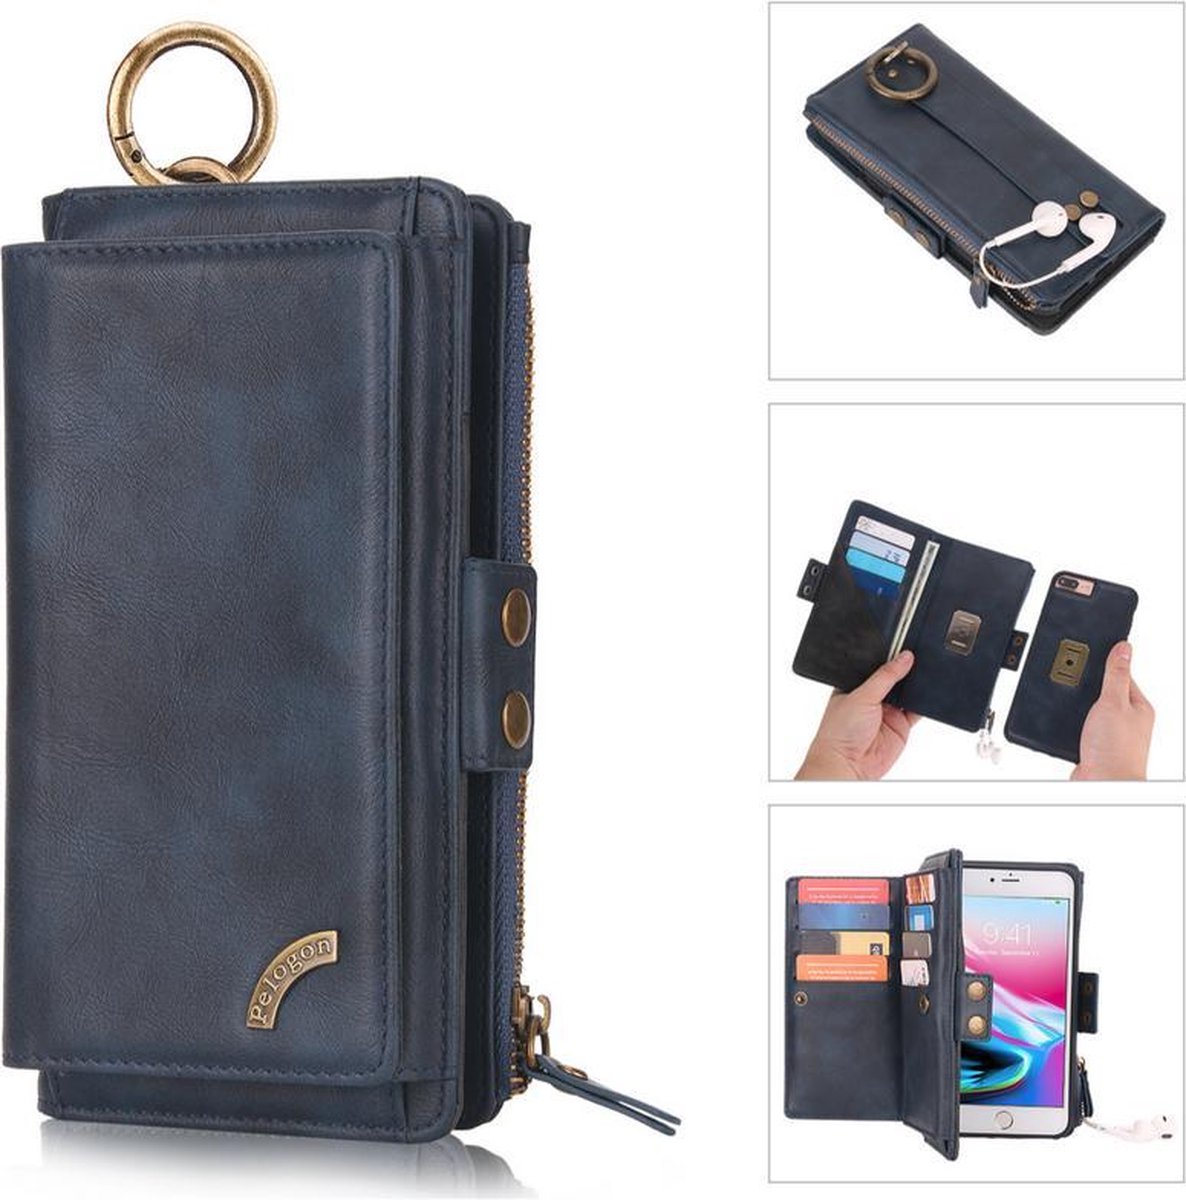 Samsung Galaxy S20 Plus Pelogon Luxe/Hoesje/Portemonnee/Boekhoesje/Bookcase voor 12 pasjes bruikbaar donkerblauw